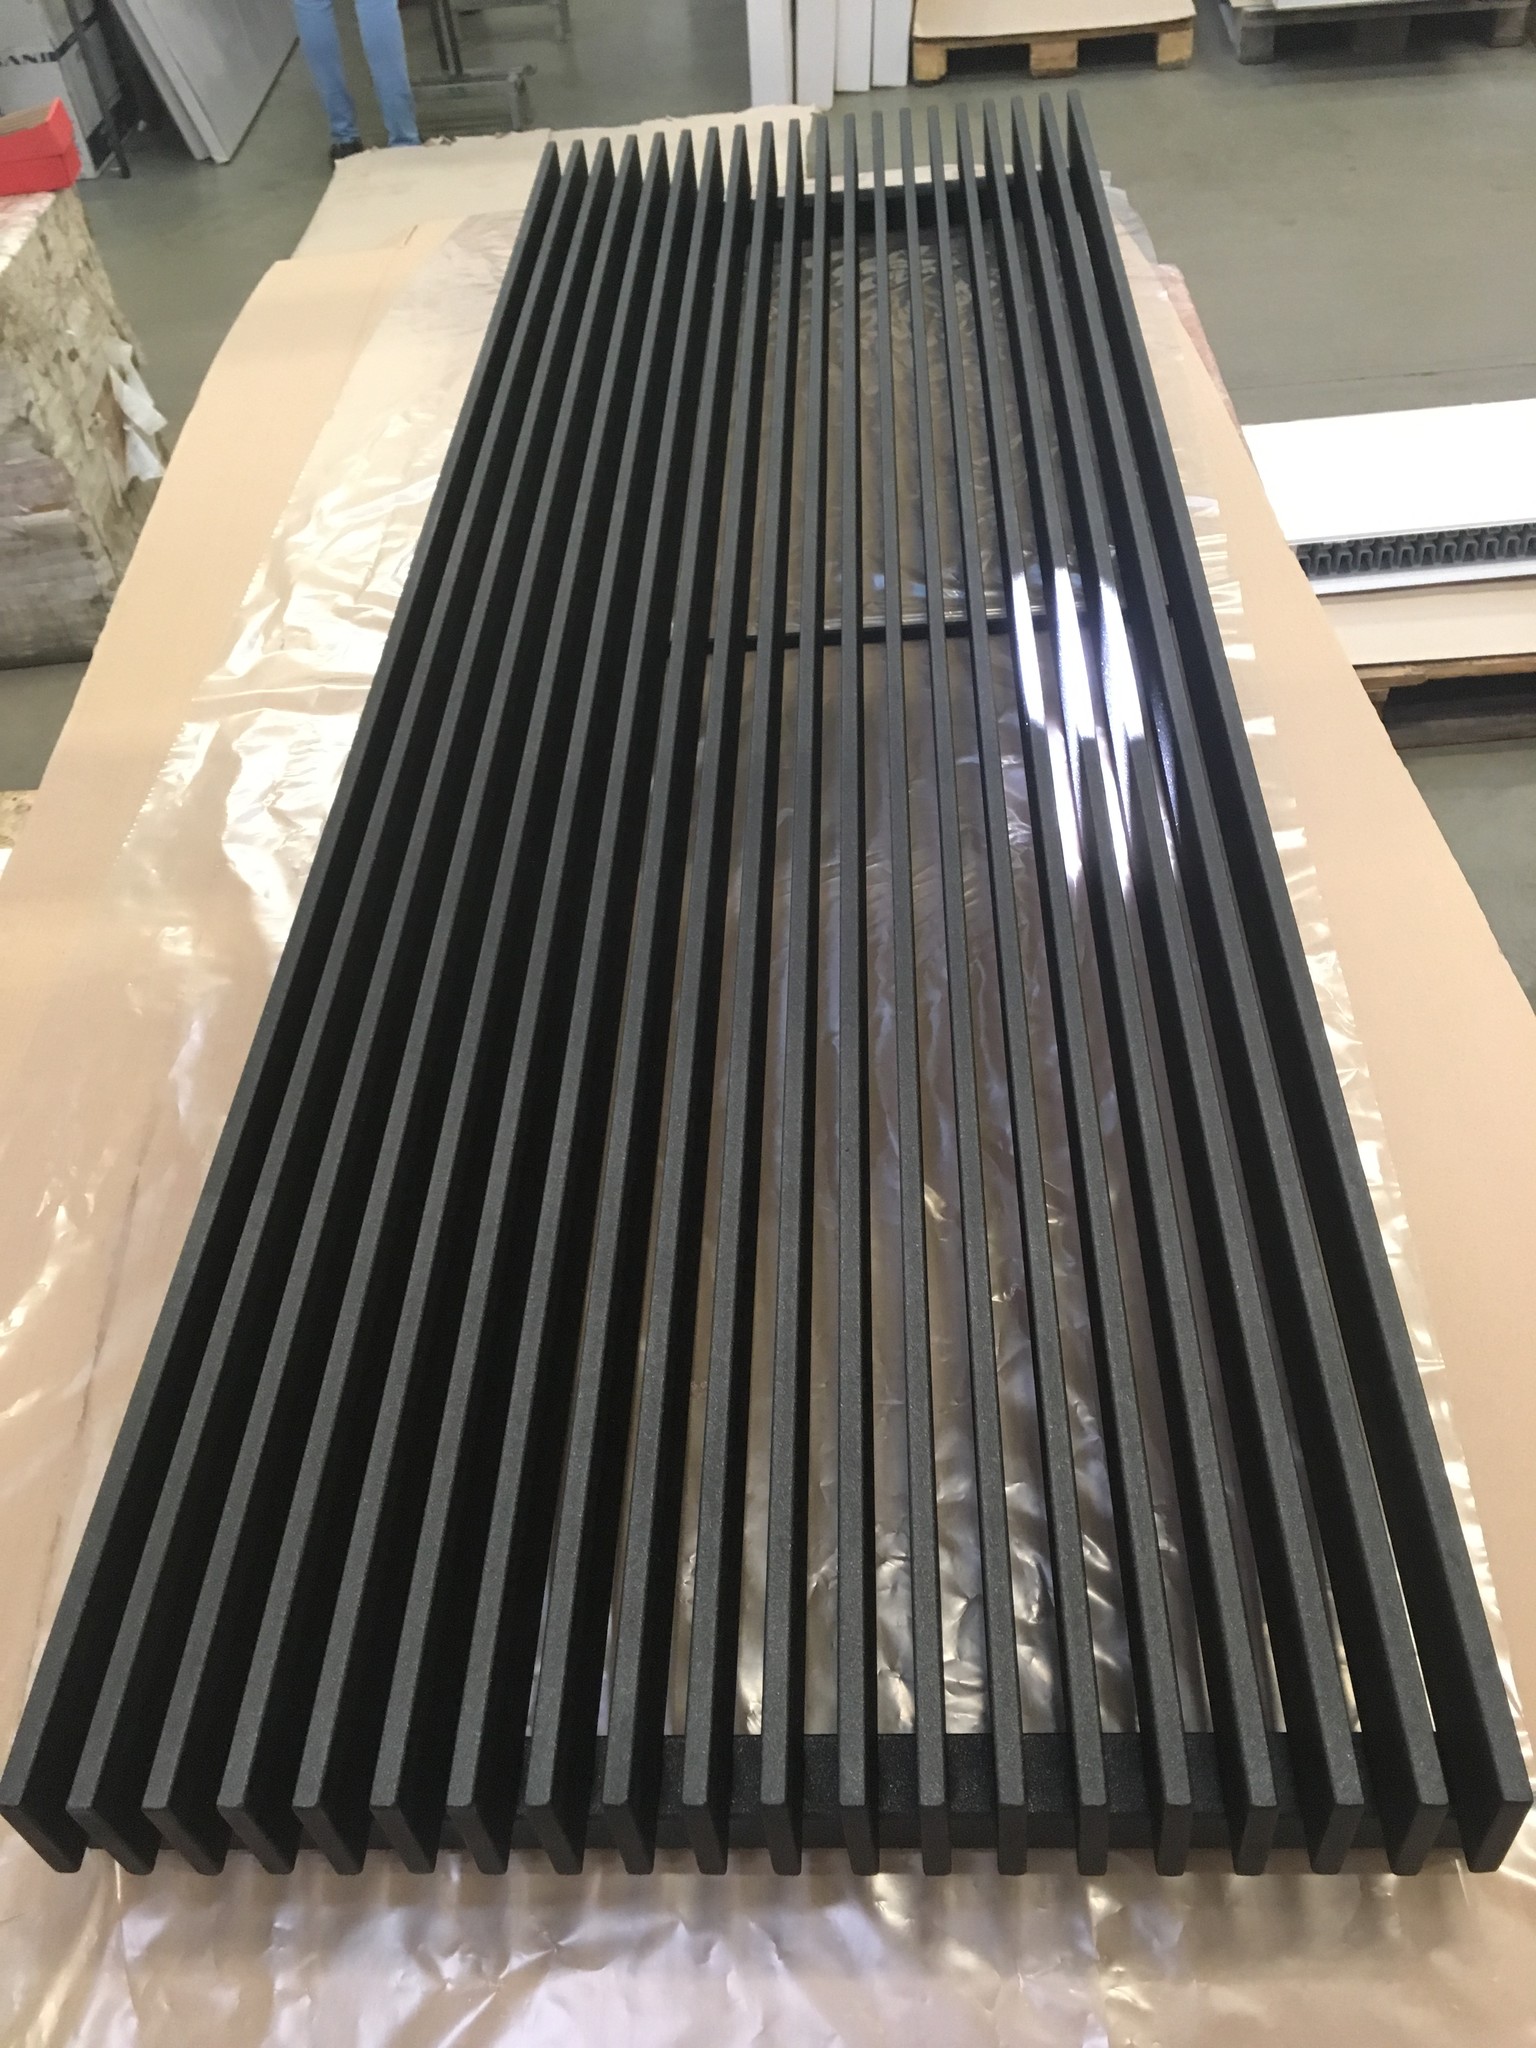 Vertical radaitor in dark colour - Coloured vertical radiator